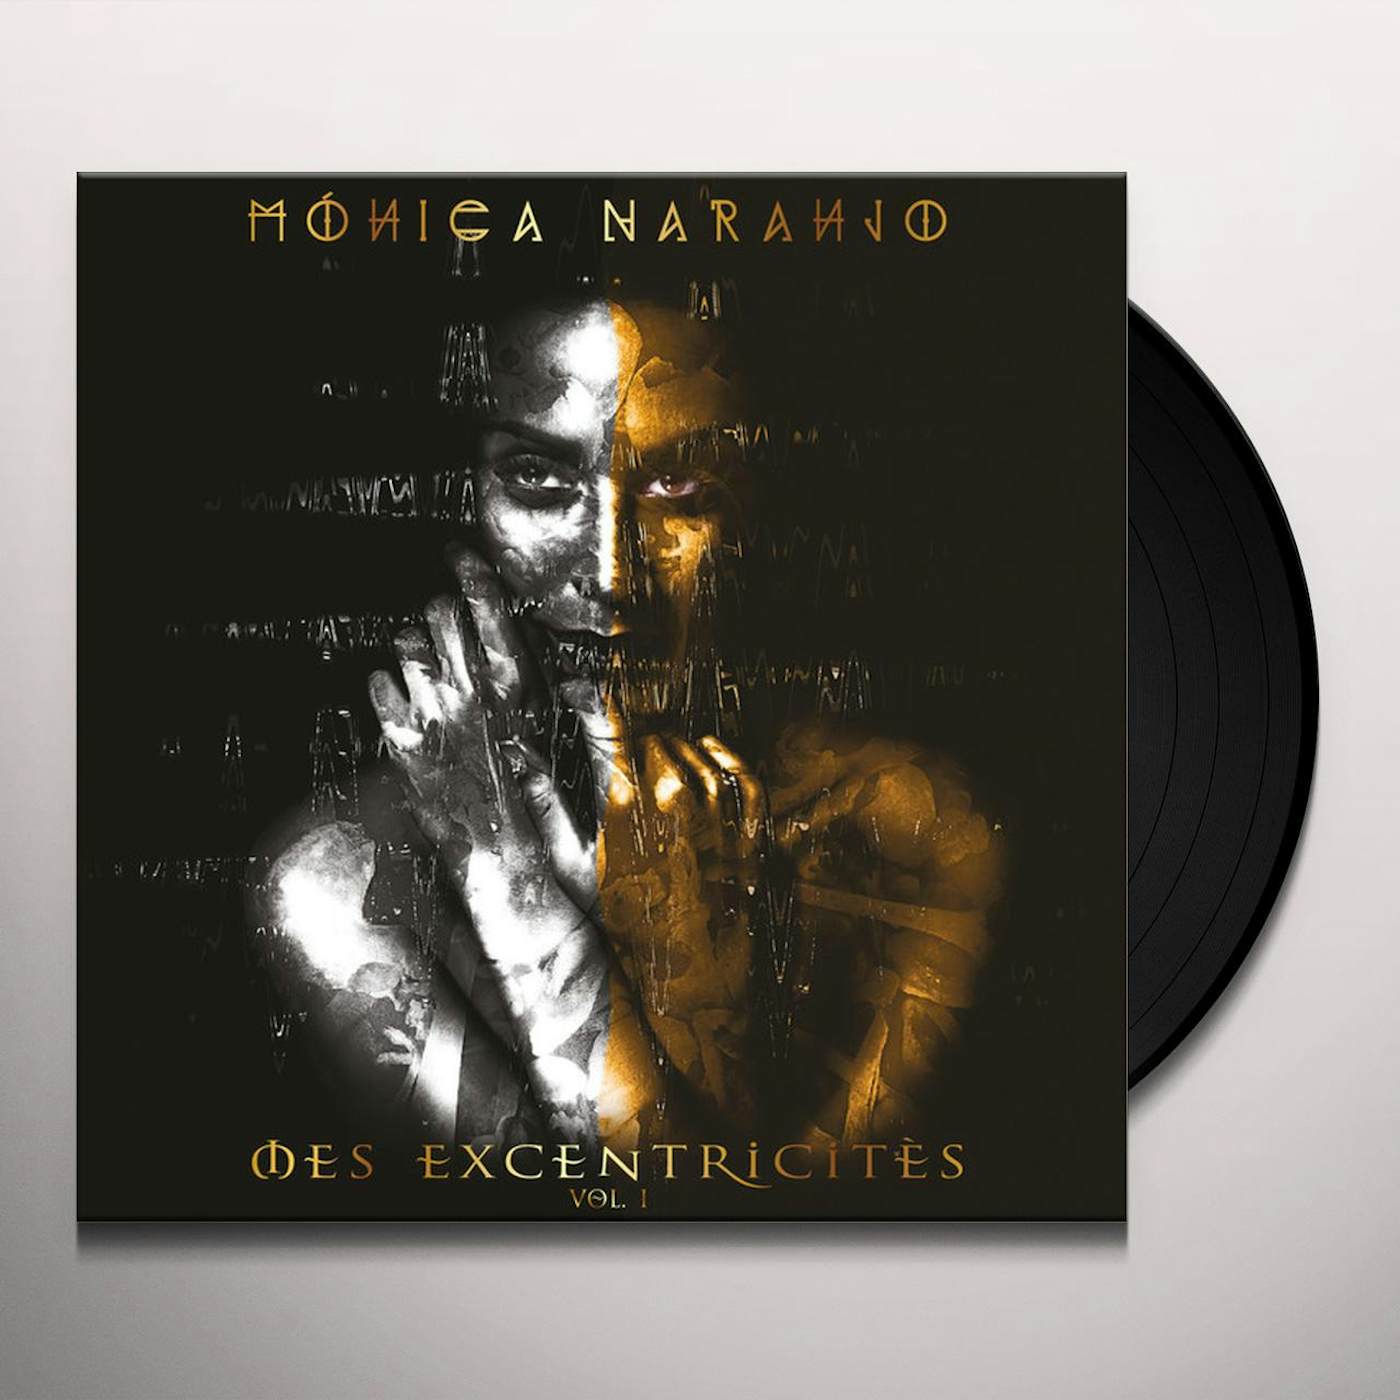 Mónica Naranjo - Palabra De Mujer - LP - Vinilo Monica